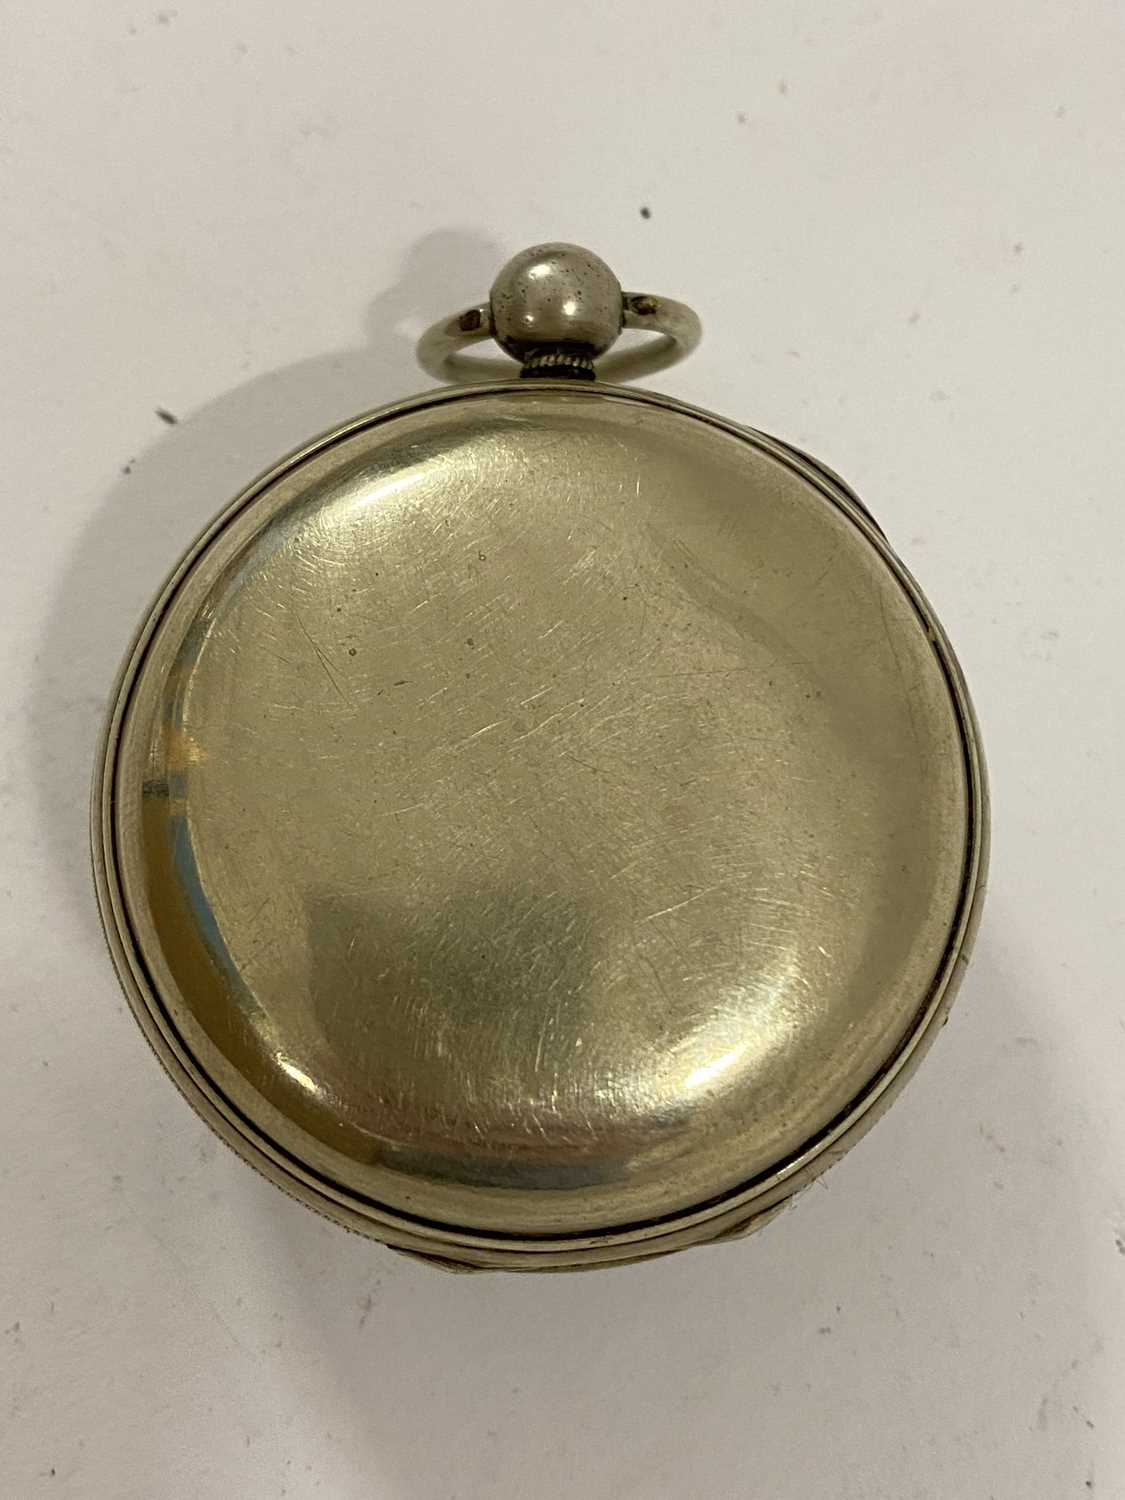 Spendlove, London, base metal cased pocket watch, lacking hands, Movement untested 4.5cm diameter - Image 2 of 2